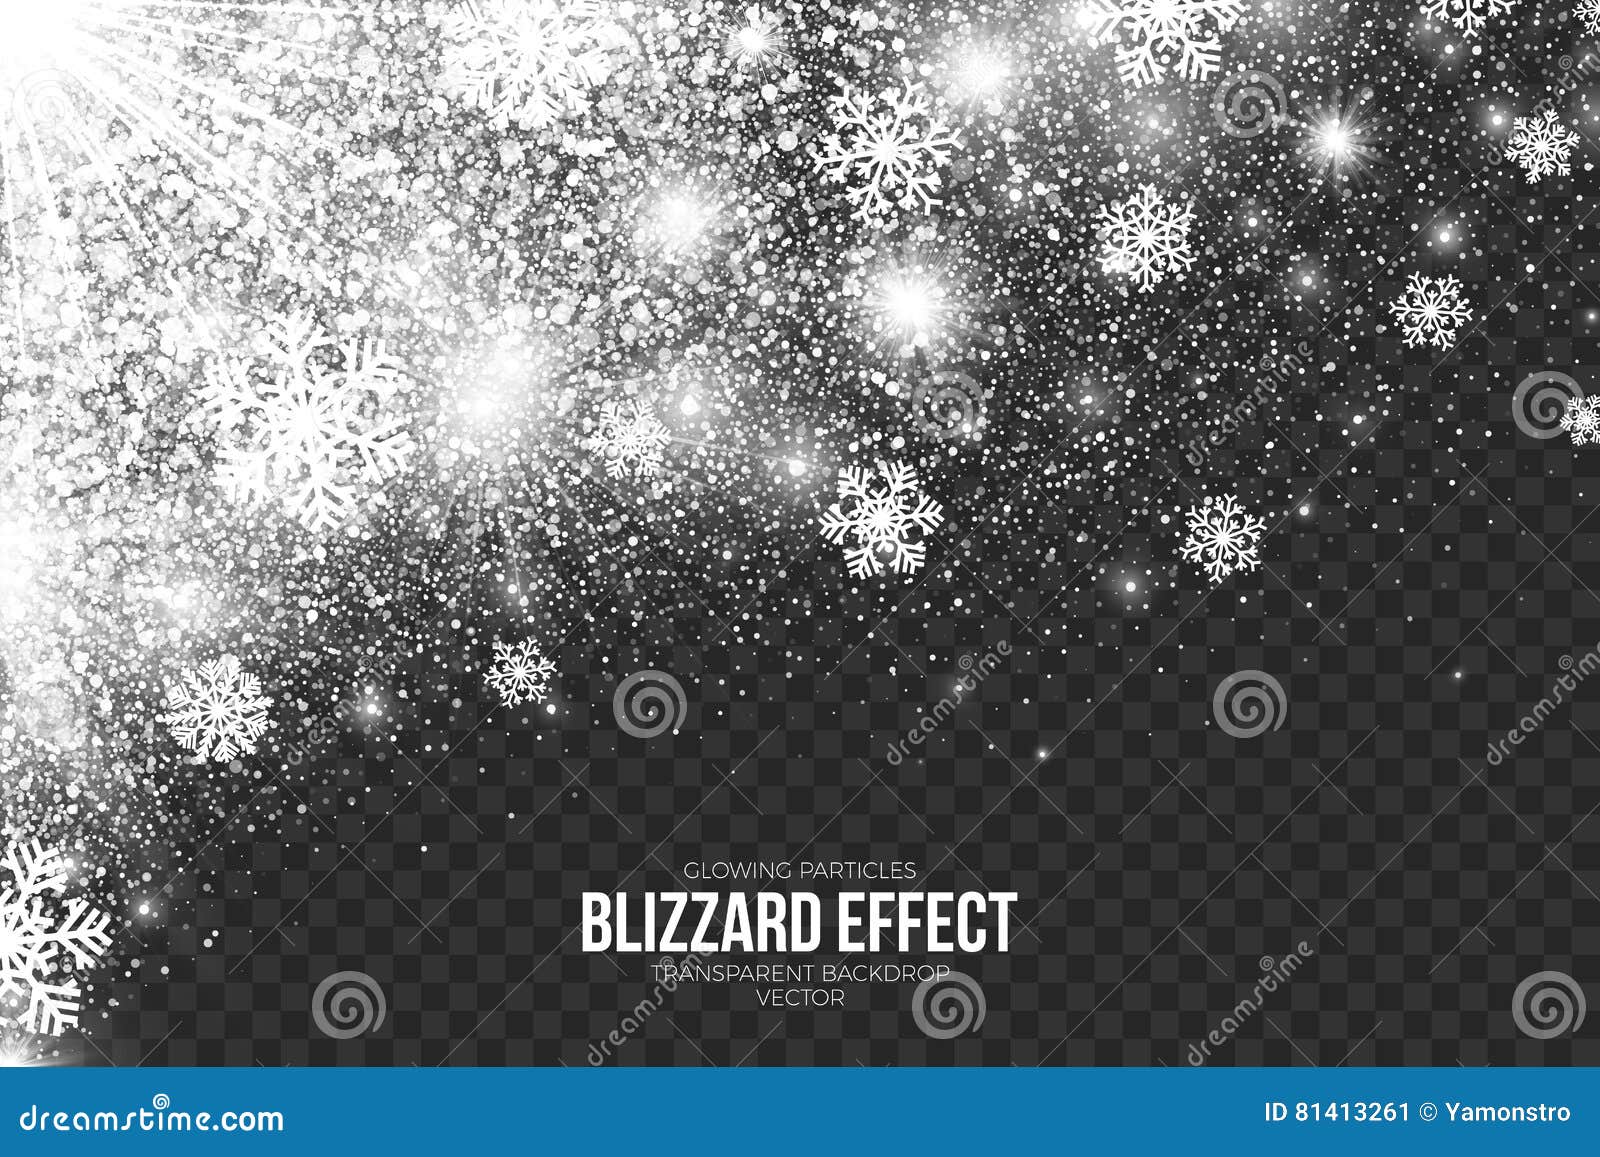 snow blizzard effect on transparent background 